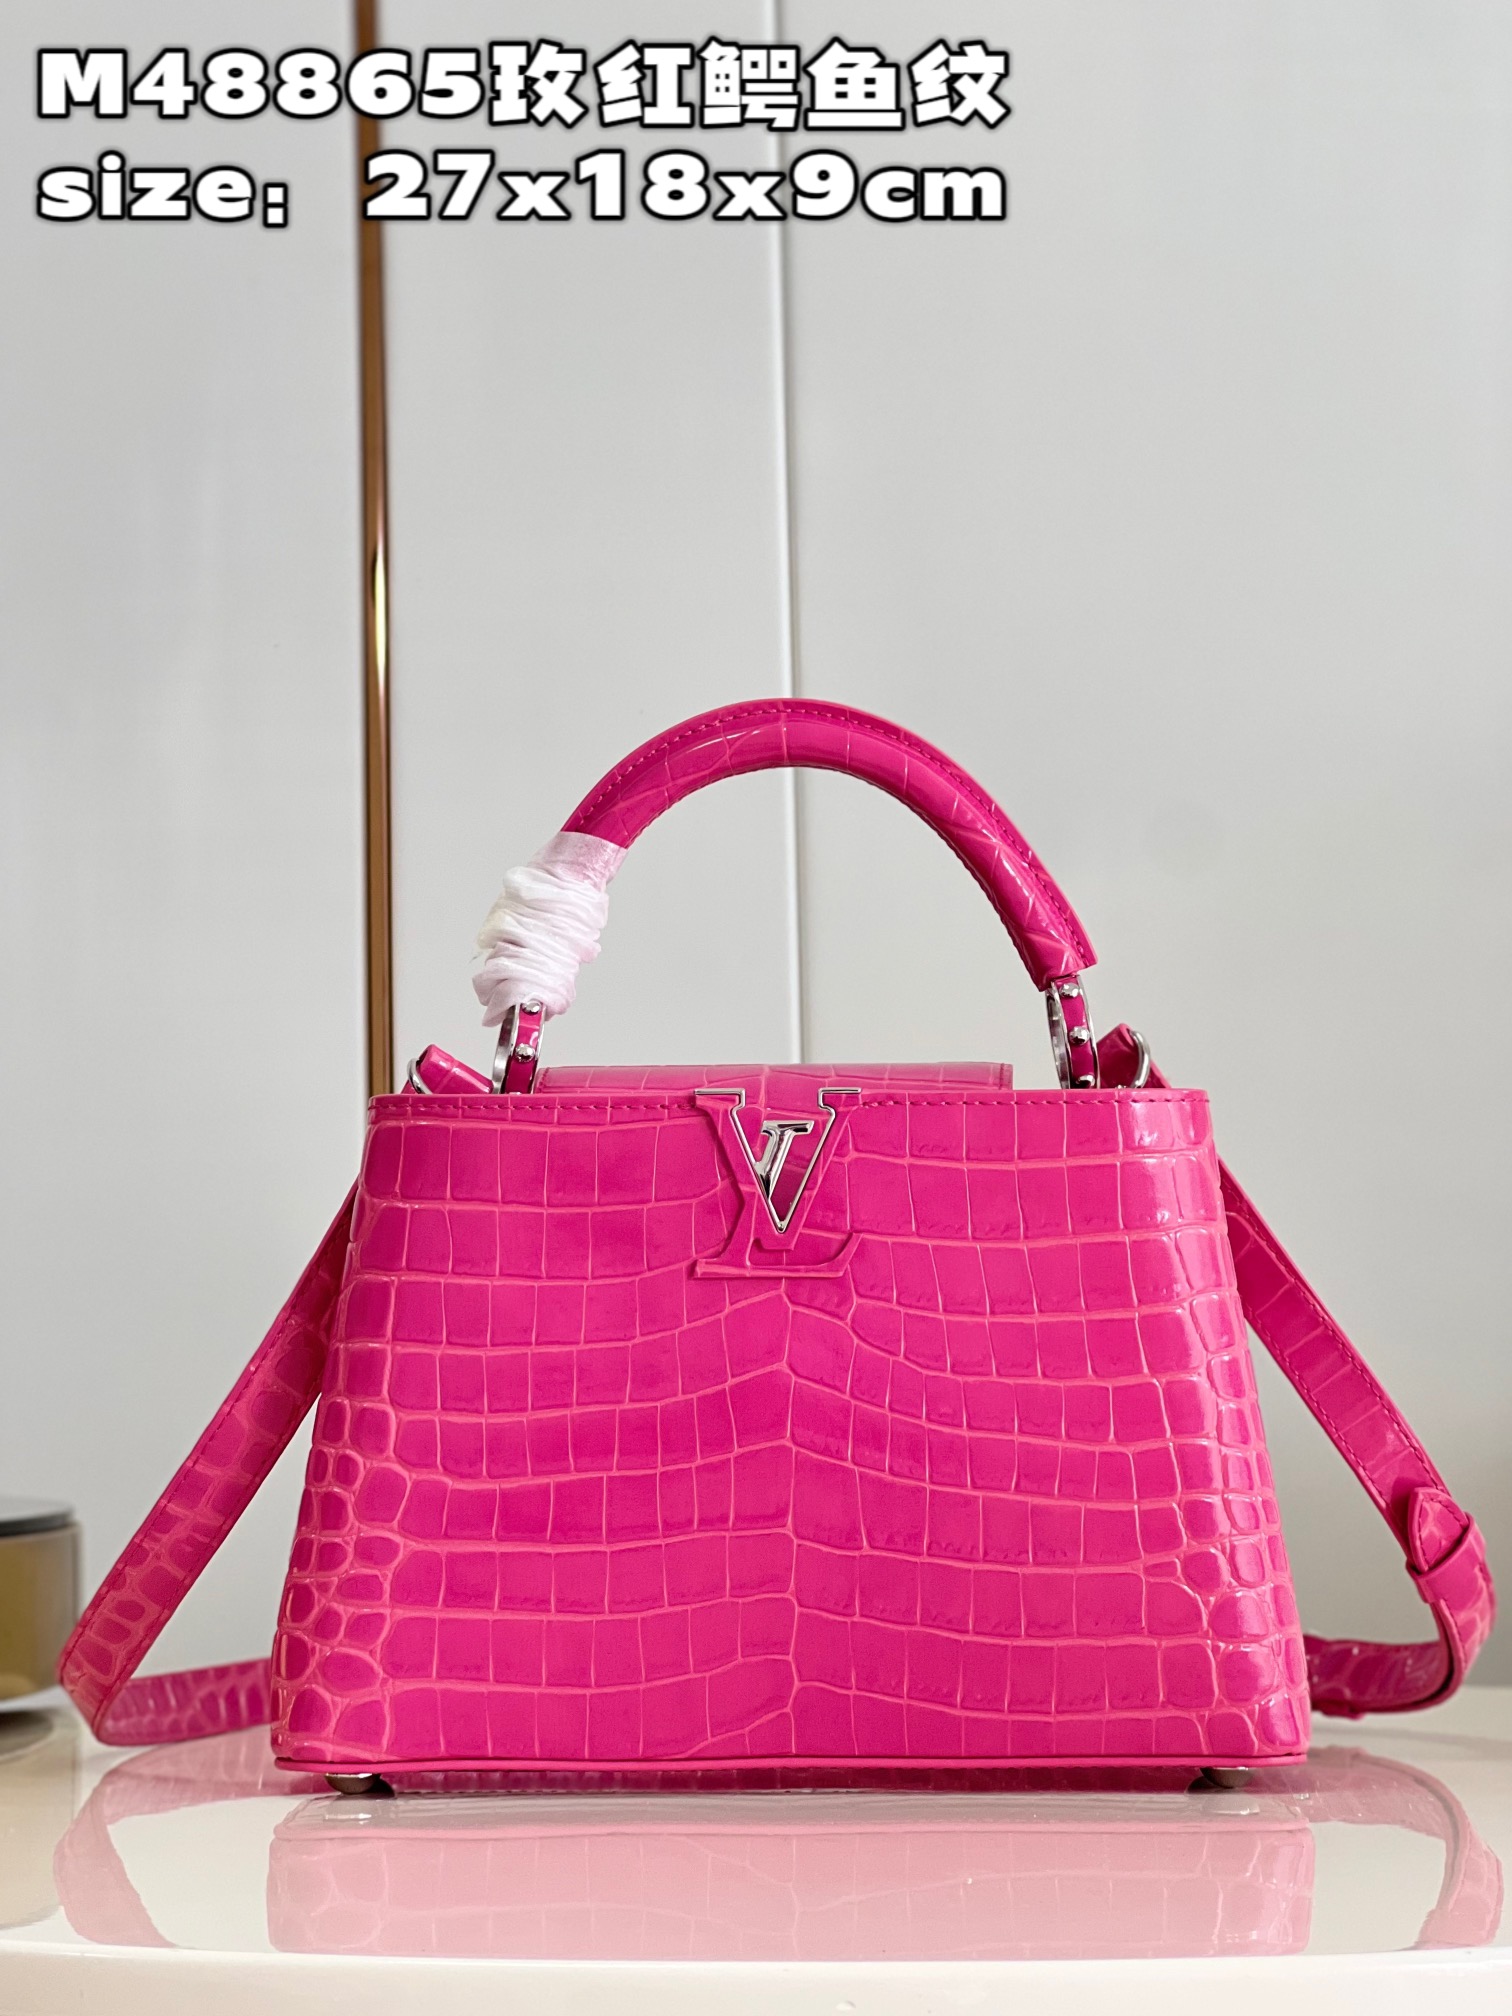 Louis Vuitton LV Capucines Bags Handbags Red Crocodile Leather Goat Skin Sheepskin M48865